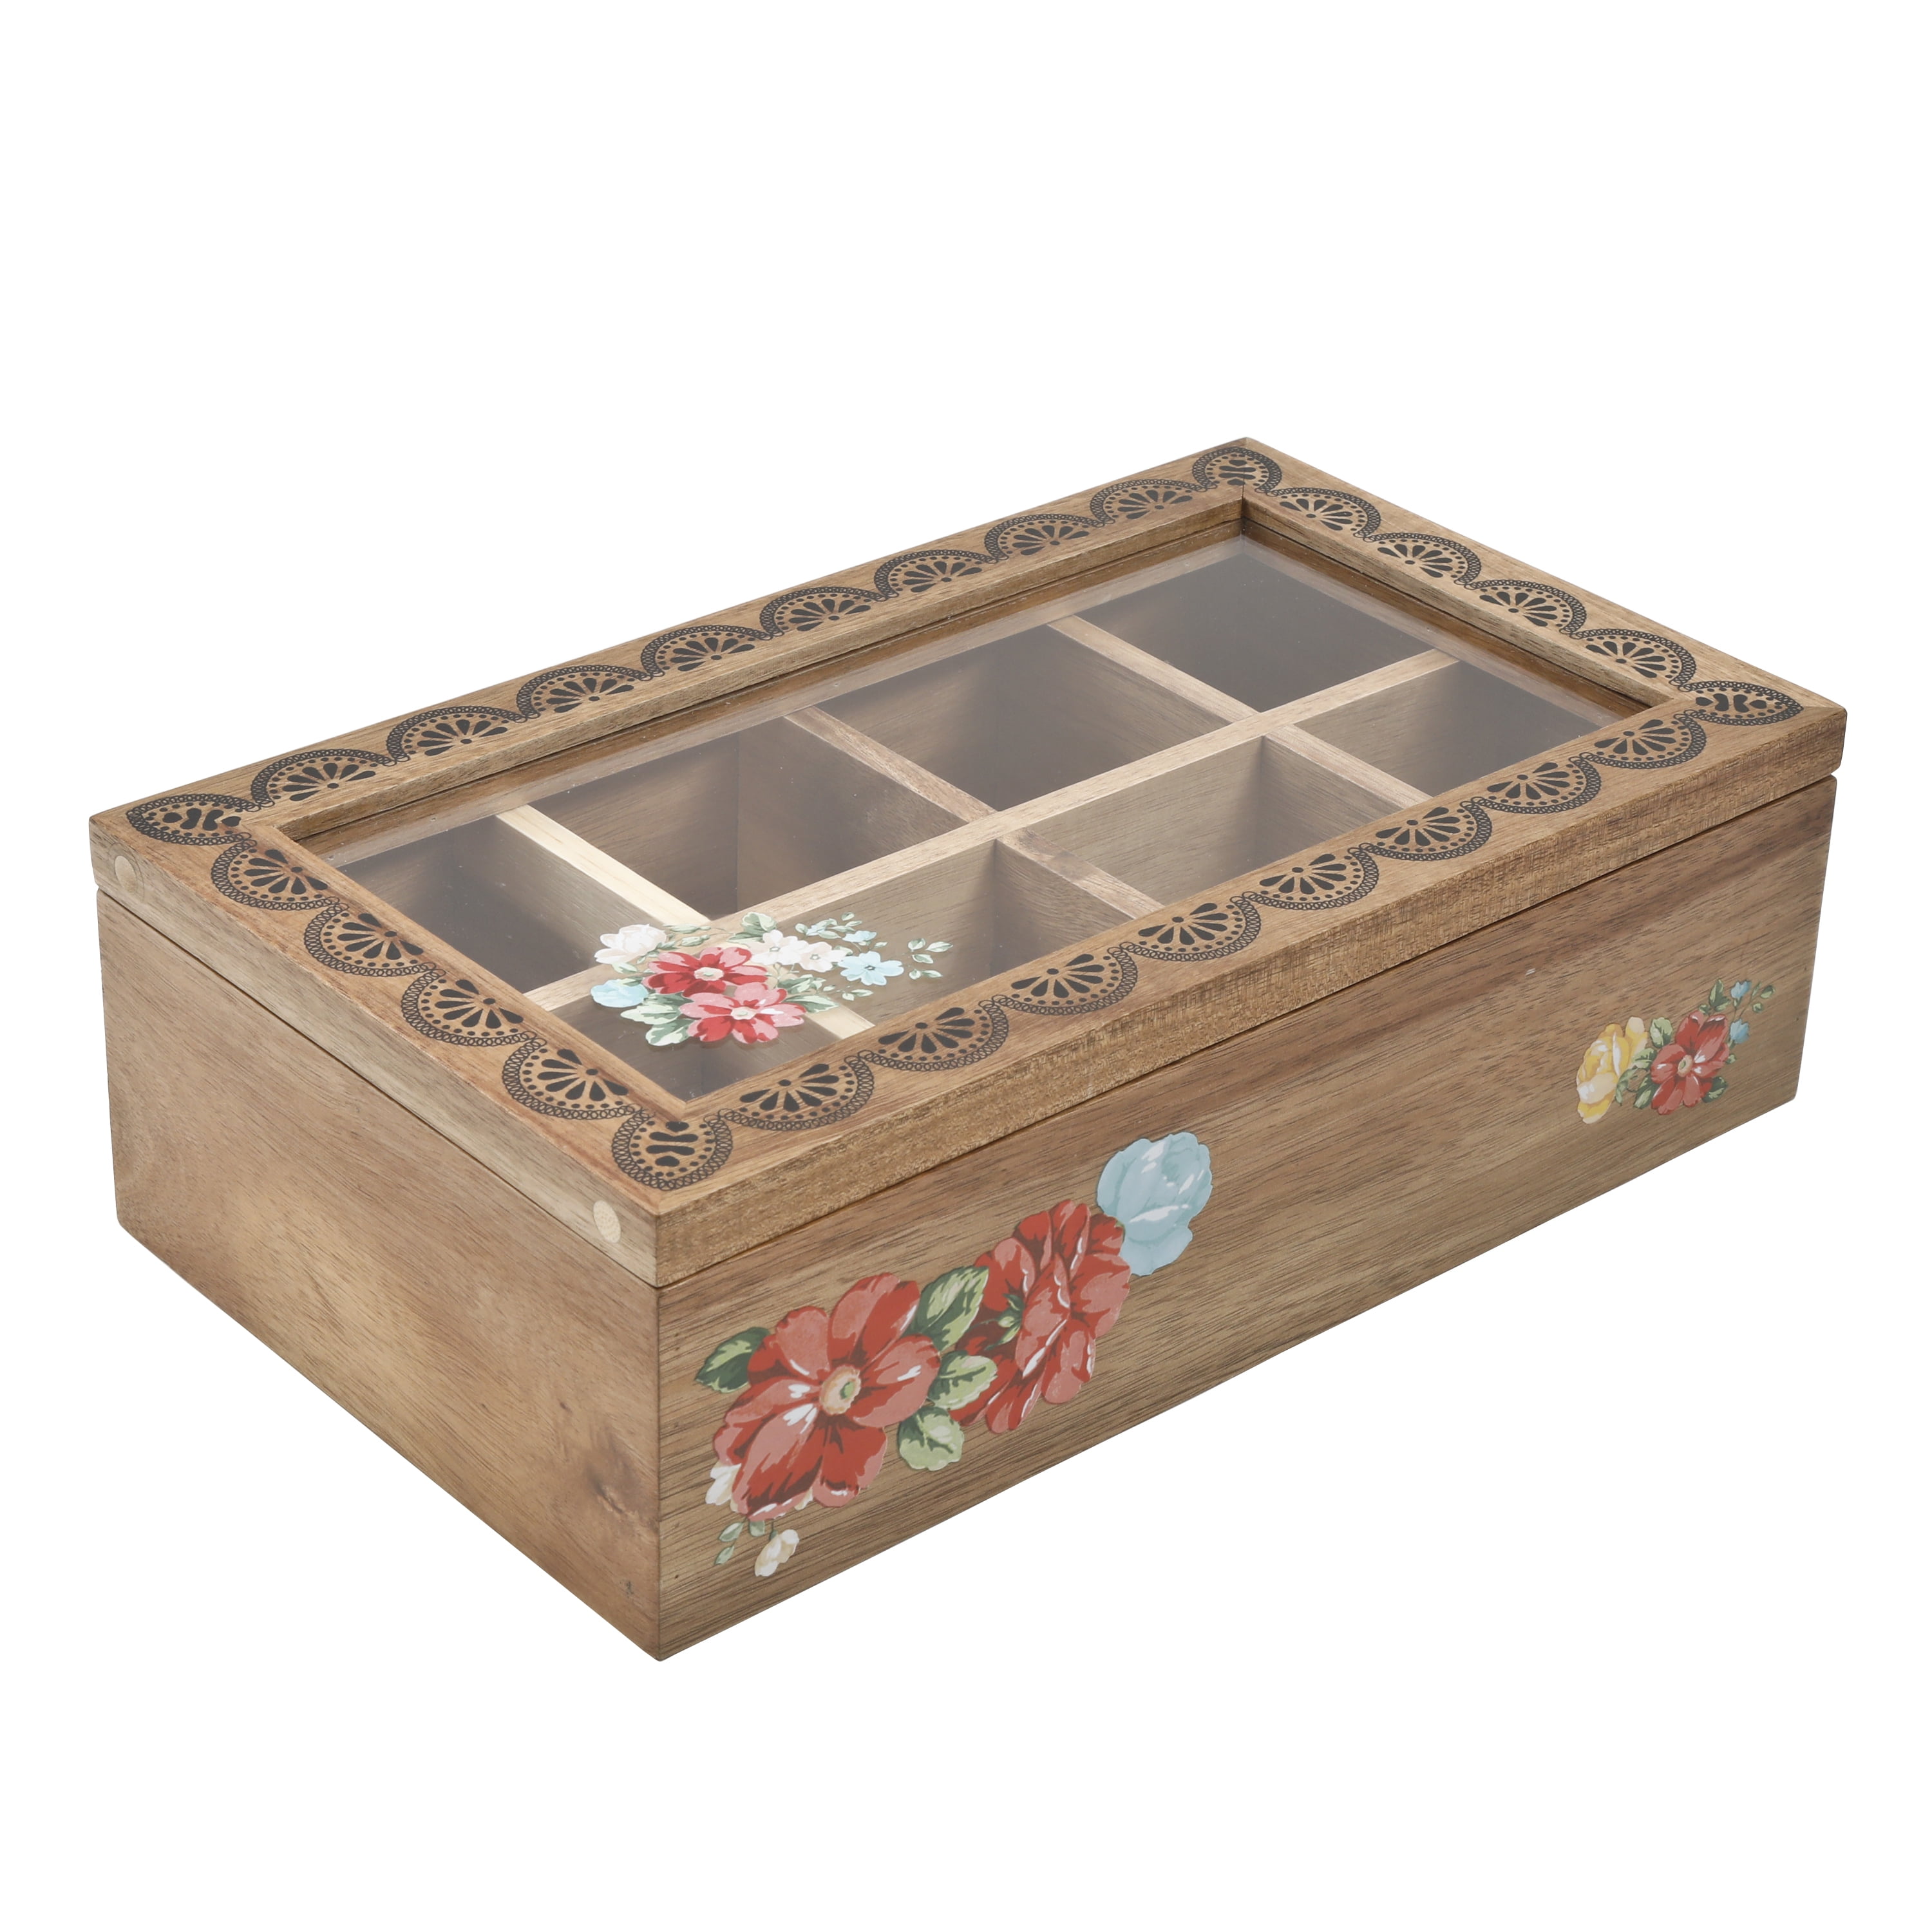 Retro Wooden Tea Storage Box Organizer Container Wood Tea Caddy Container Holder 